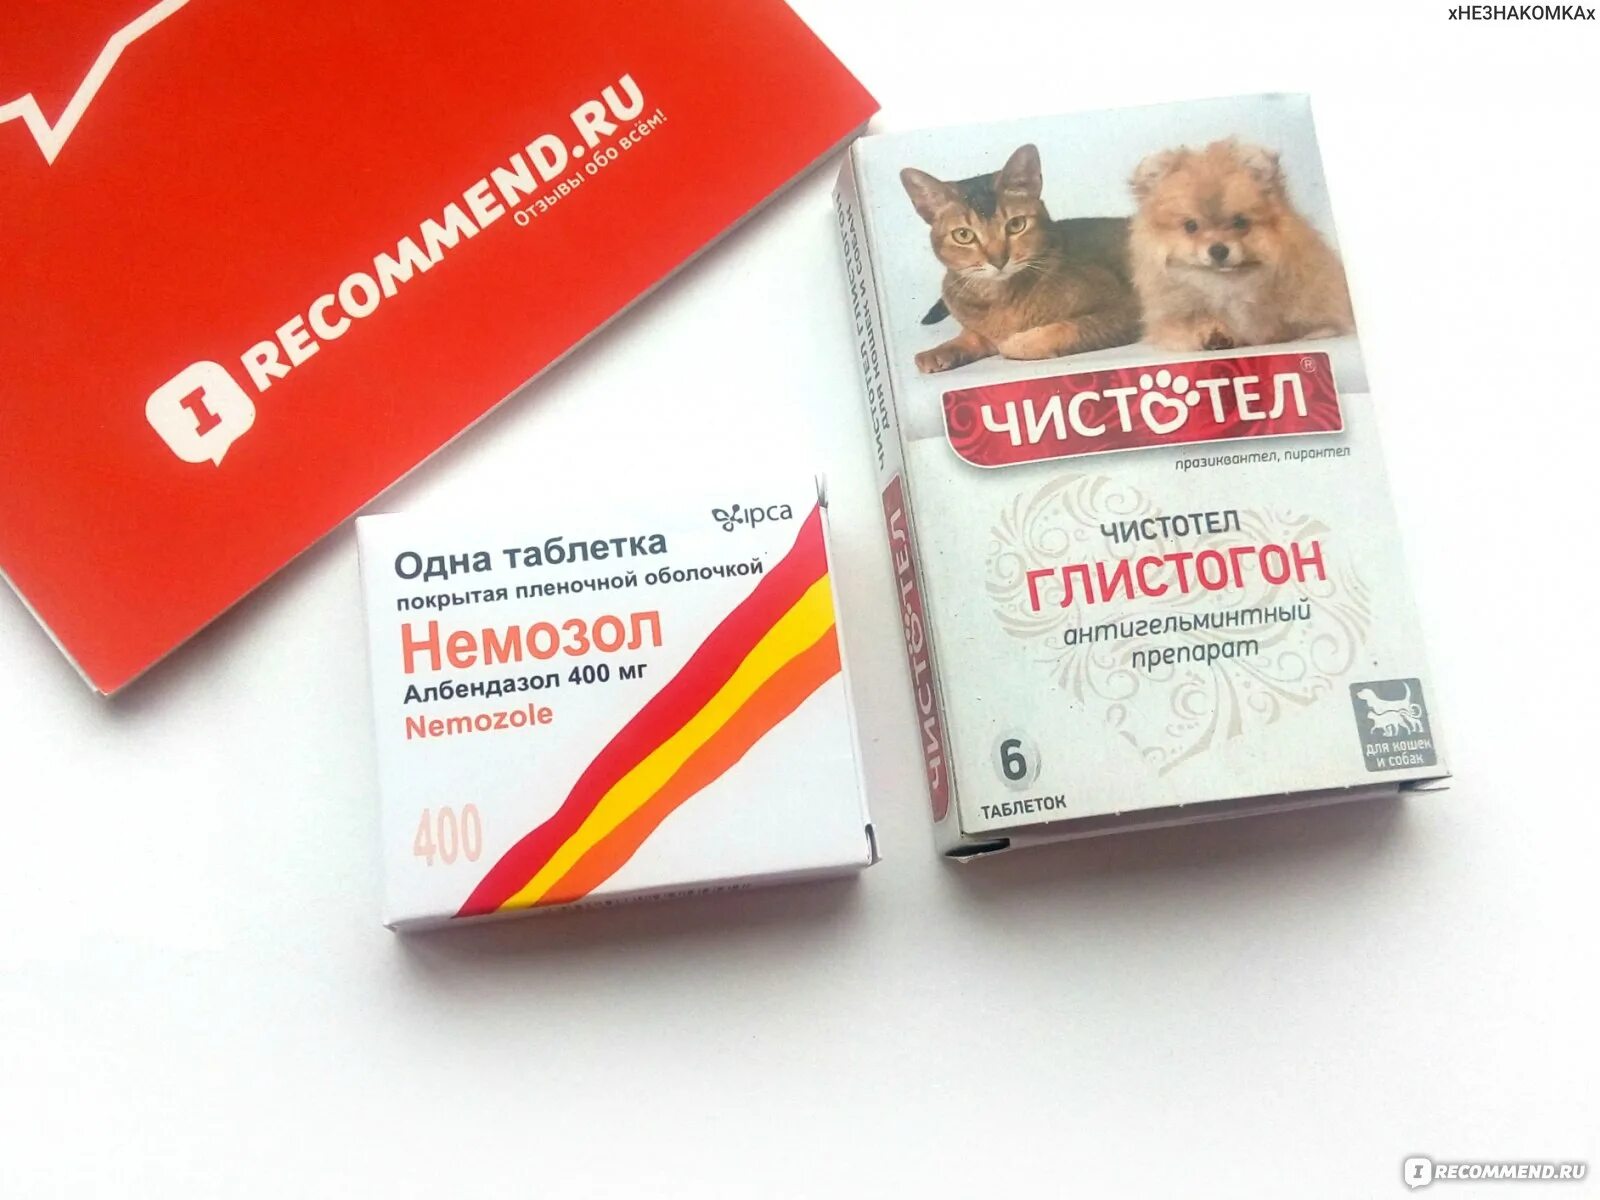 Глистогон немозол. Таблетки от глистов глистогон для кошек. Таблетки от гельминтов для кошек широкого спектра. Немозол для кошек.